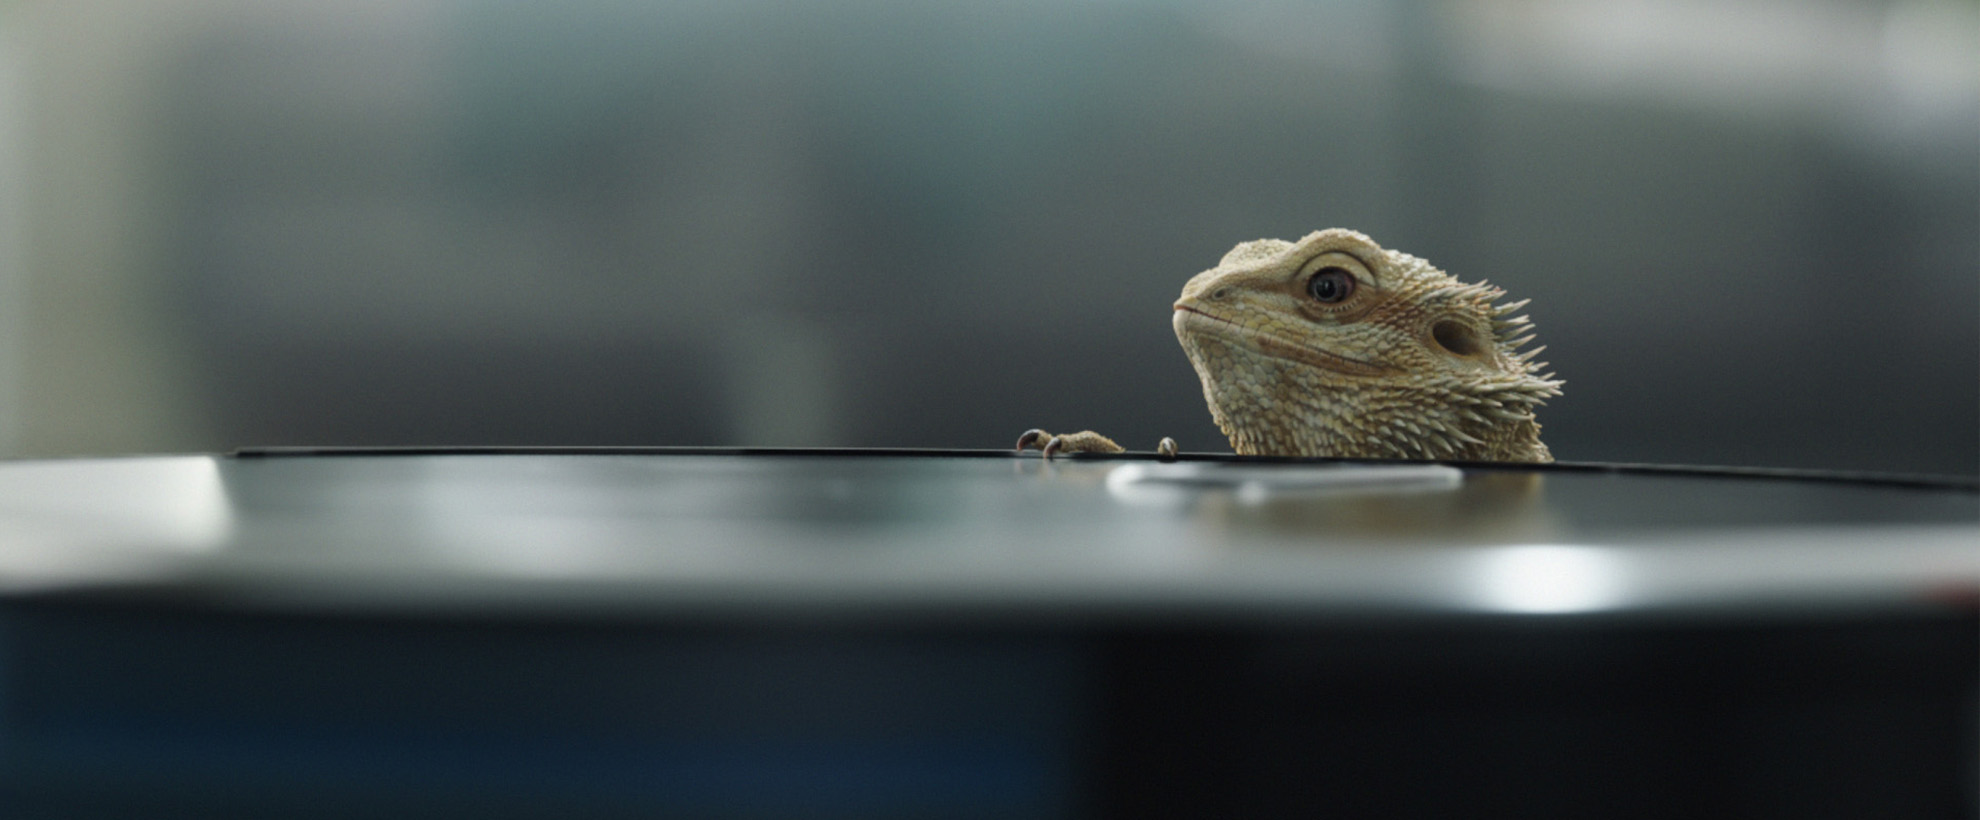 A lizard peers over a countertop